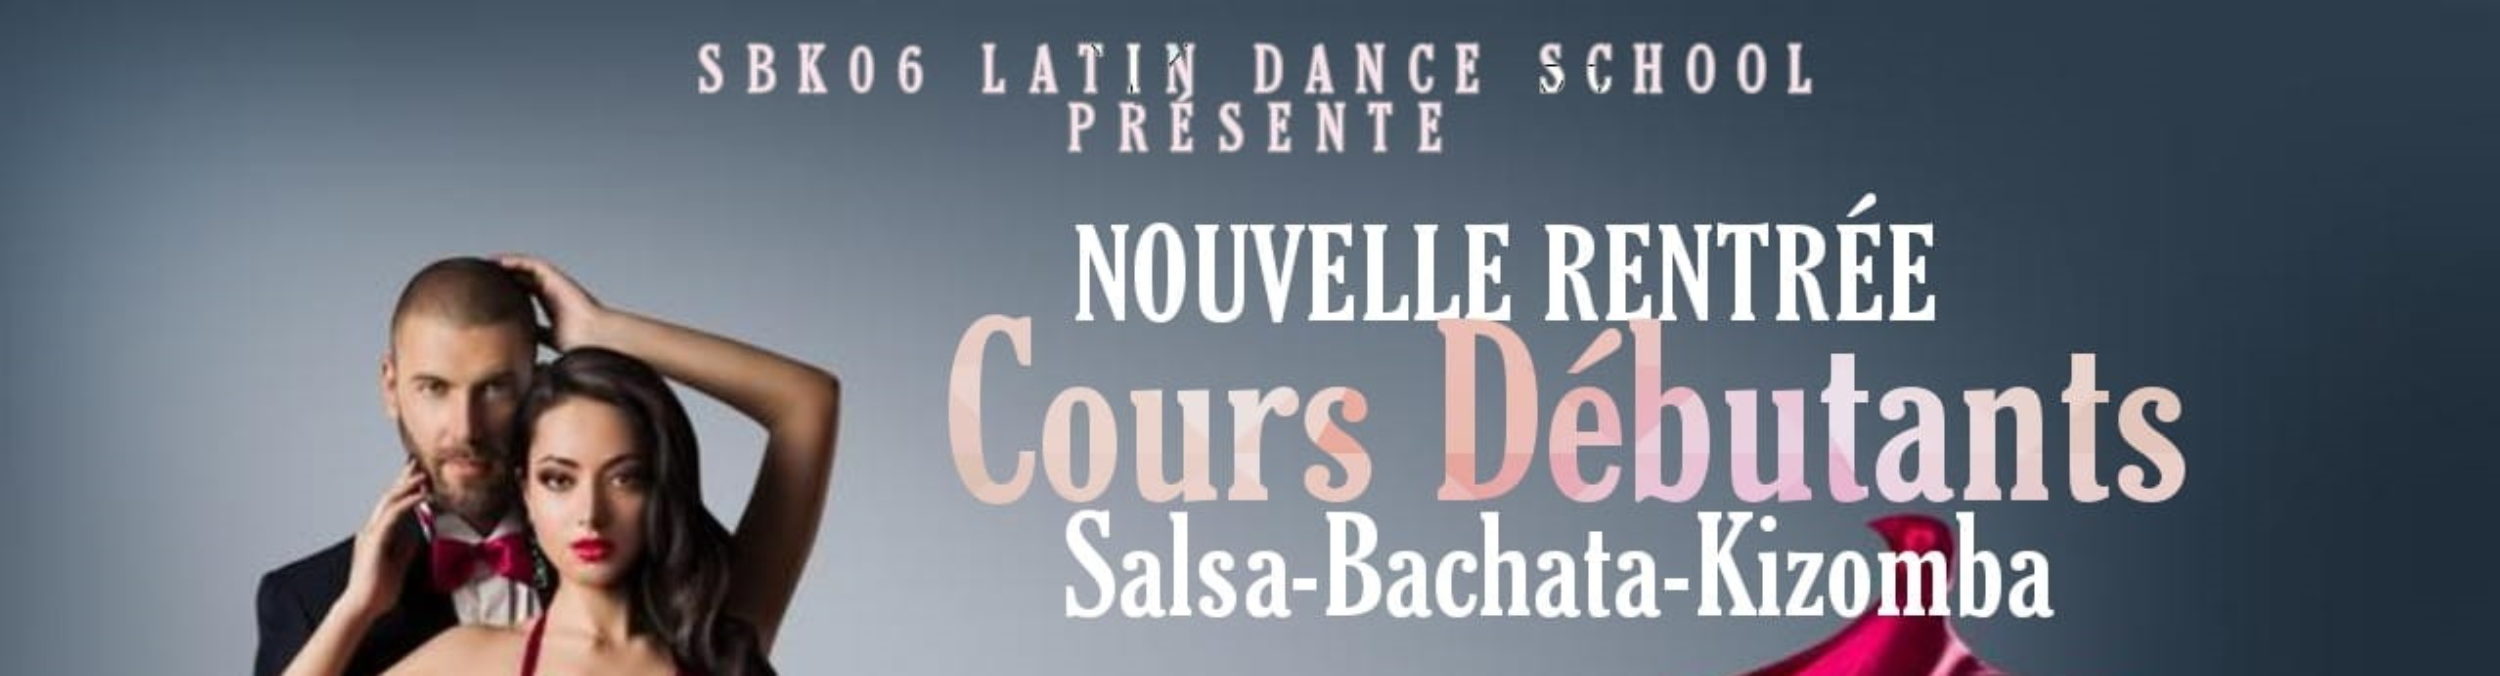 SBK06 Latin Dance School